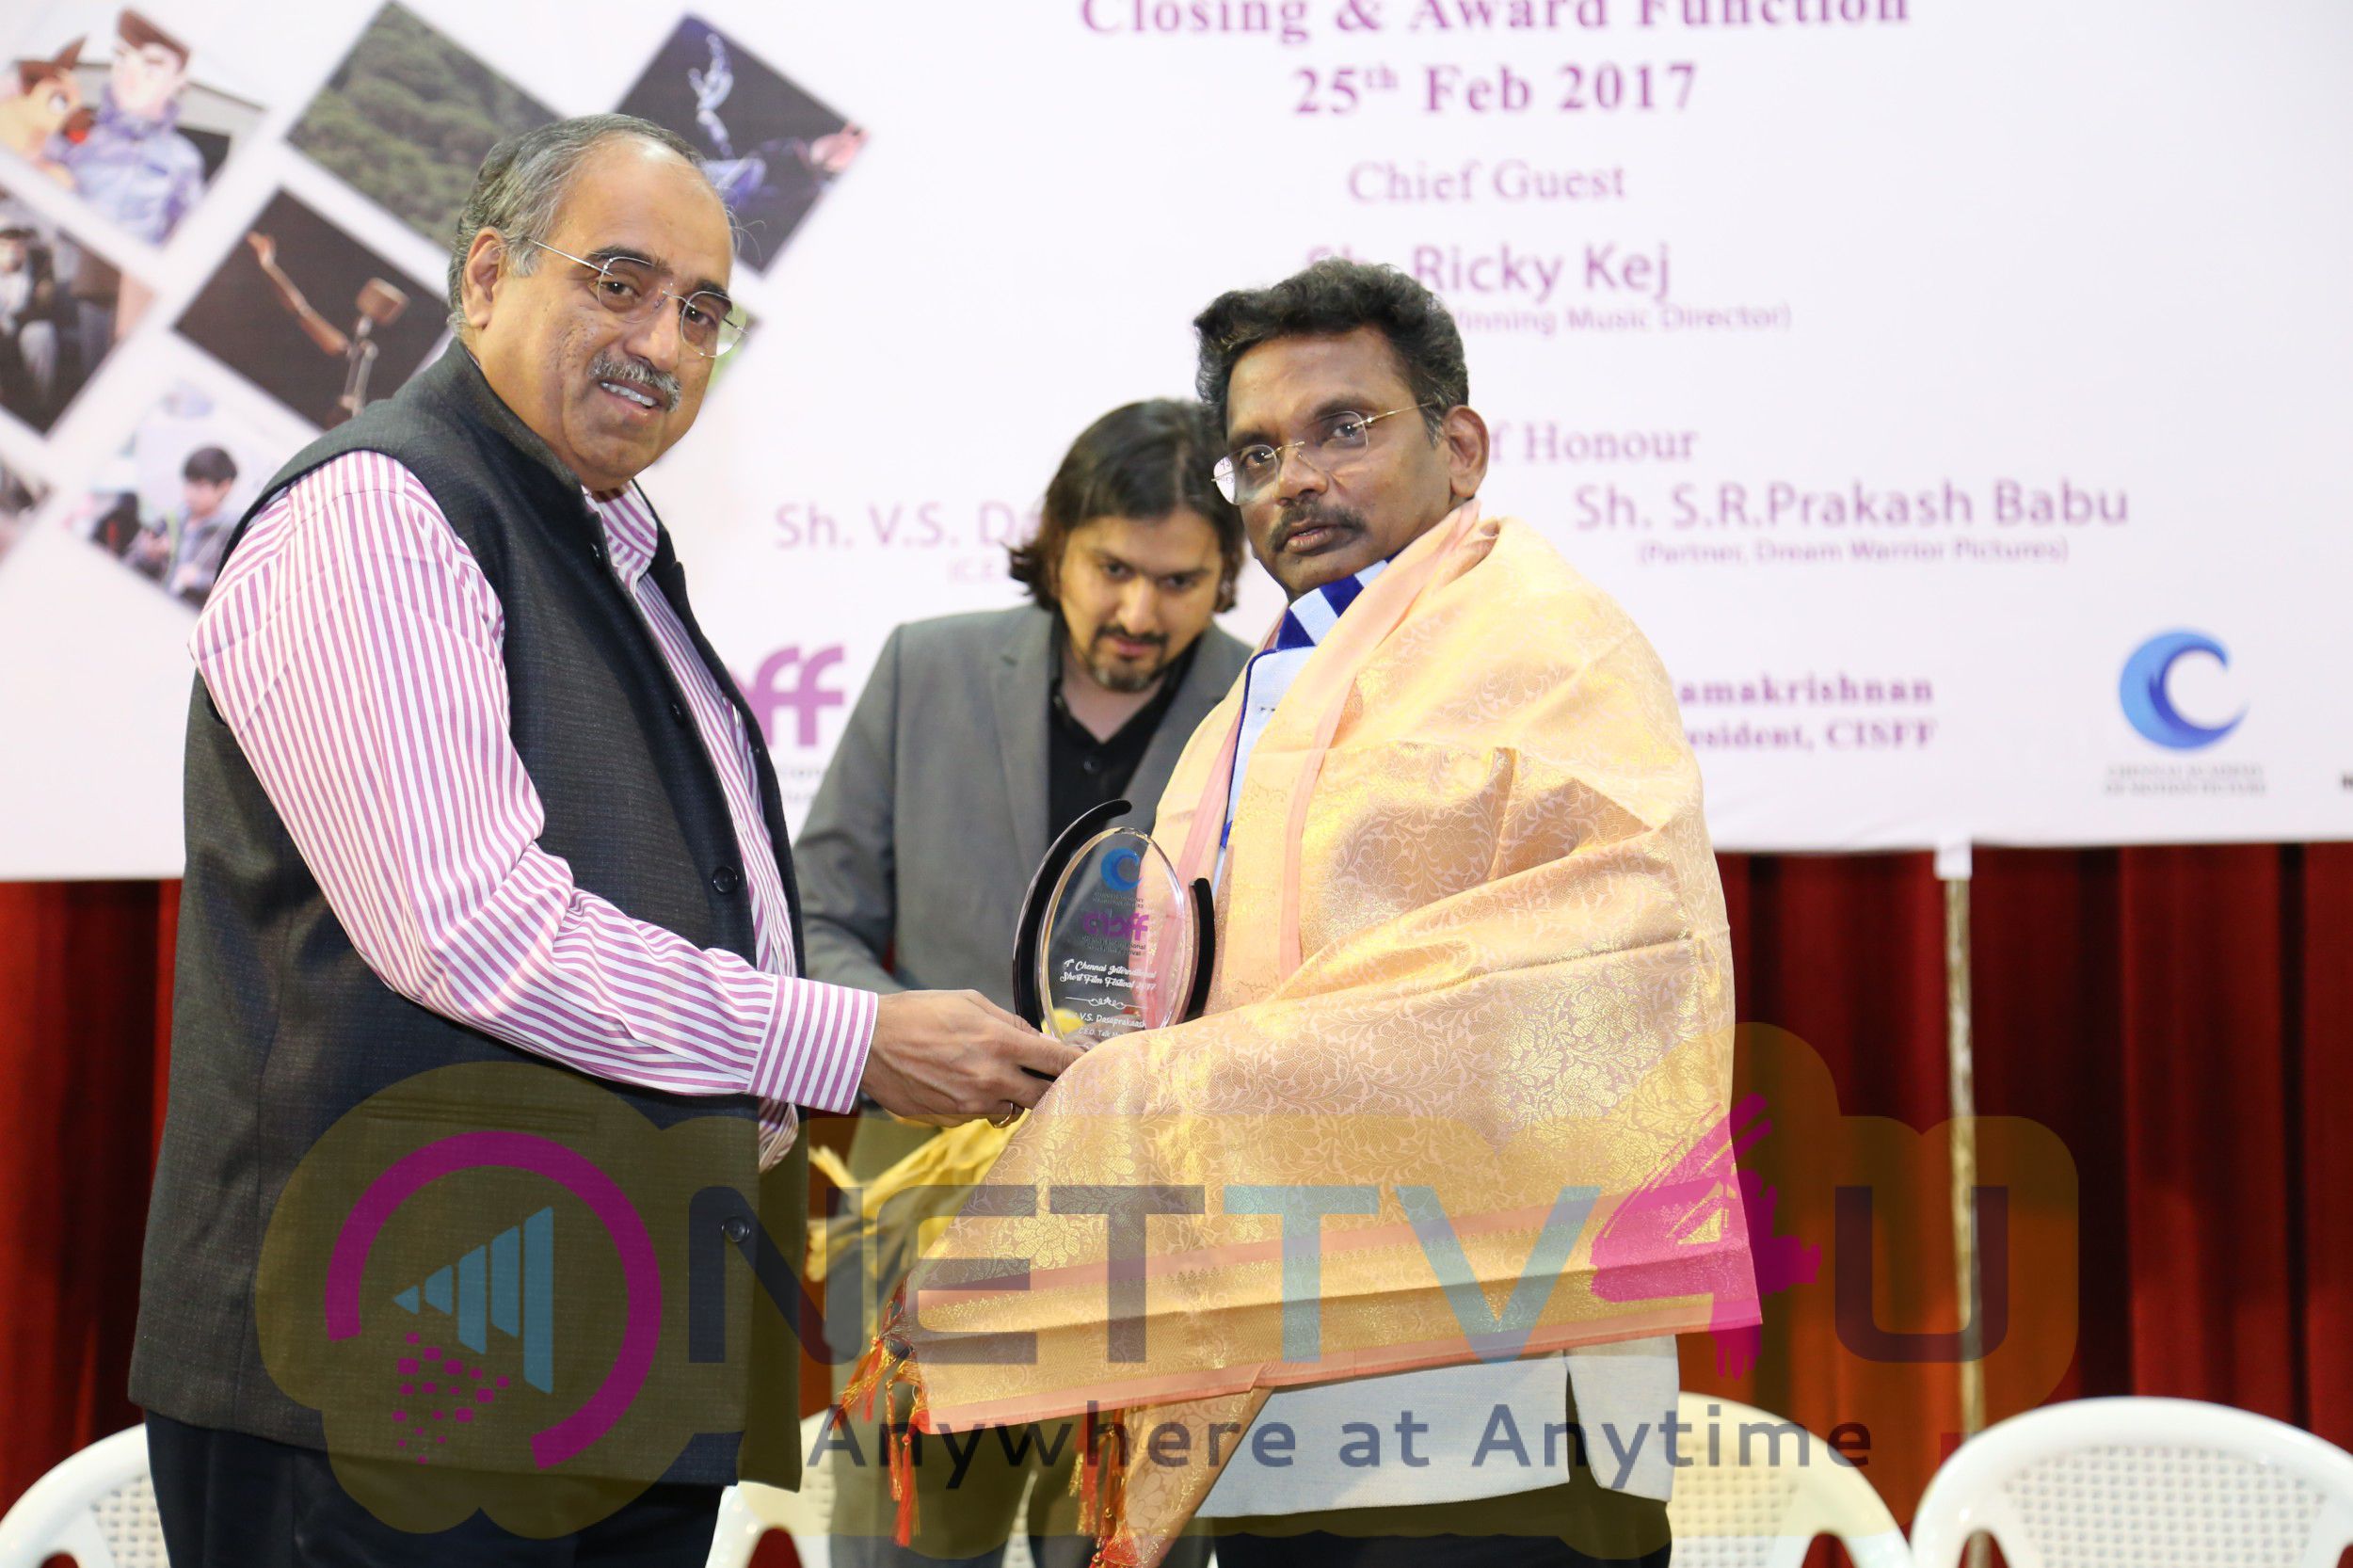 4th Chennai International Short Film Festival Closing Ceremony And Award Function Delightful Photos Tamil Gallery